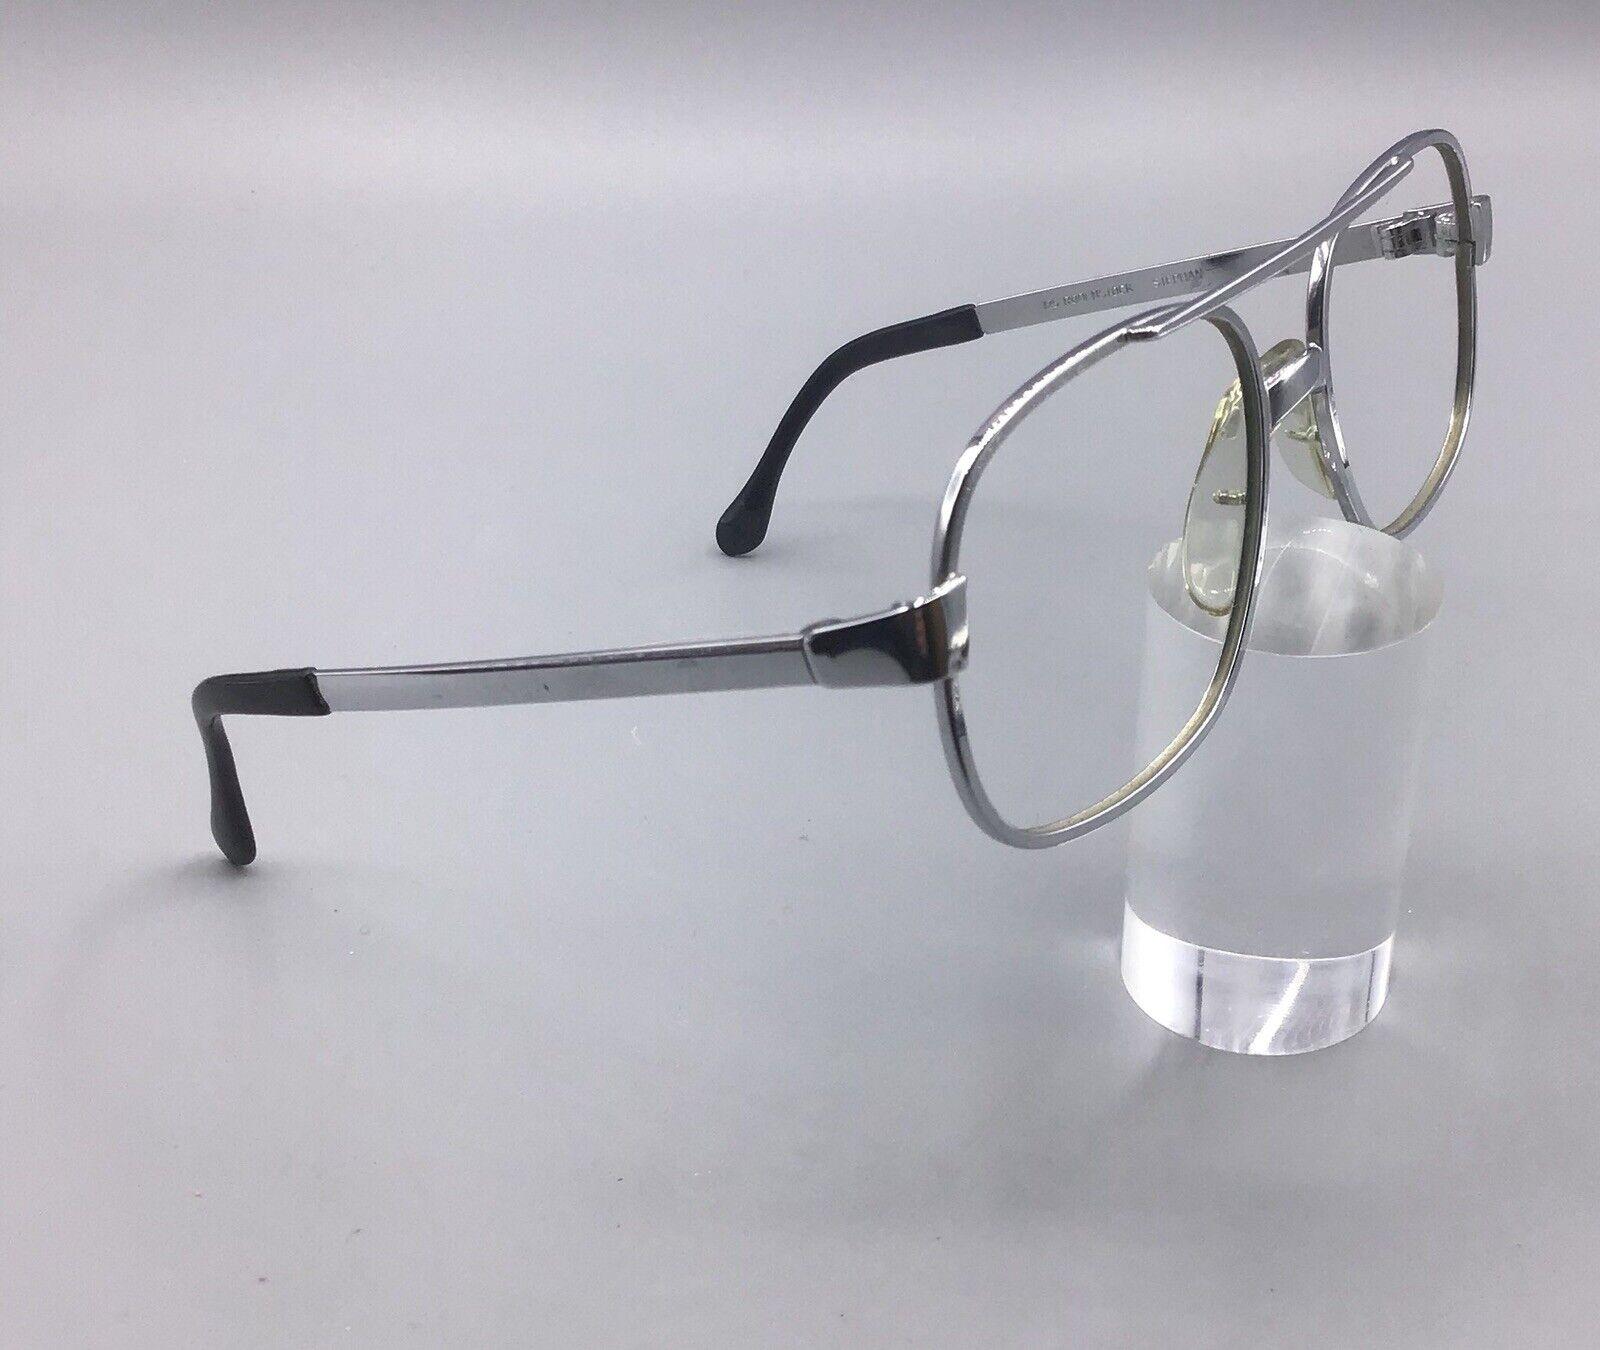 Rodenstock Stephan occhiale vintage eyewear frame brillen